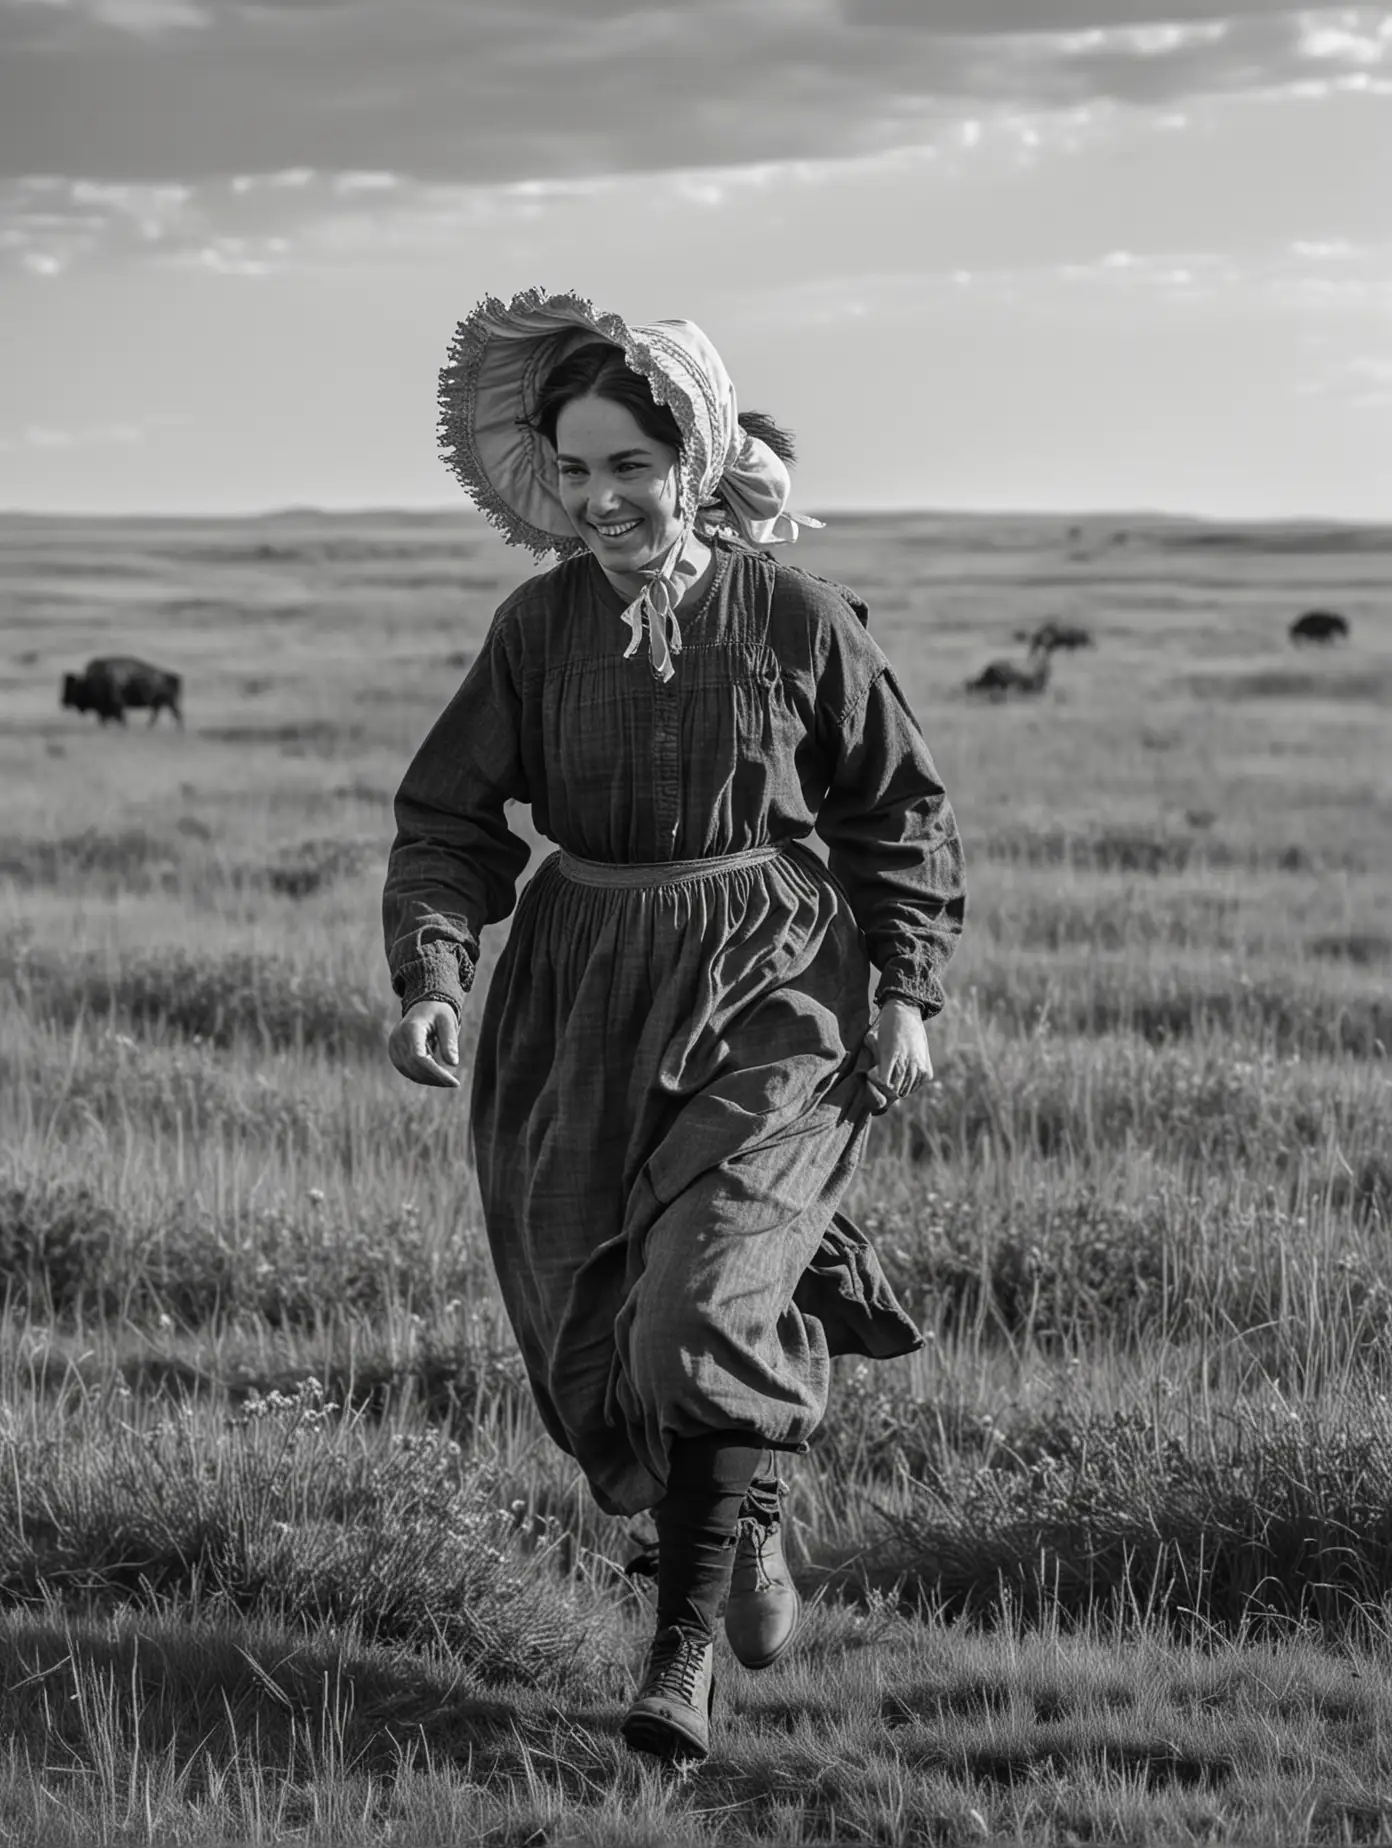 Pioneer Woman Running Across Prairie with Buffalo in Monochrome